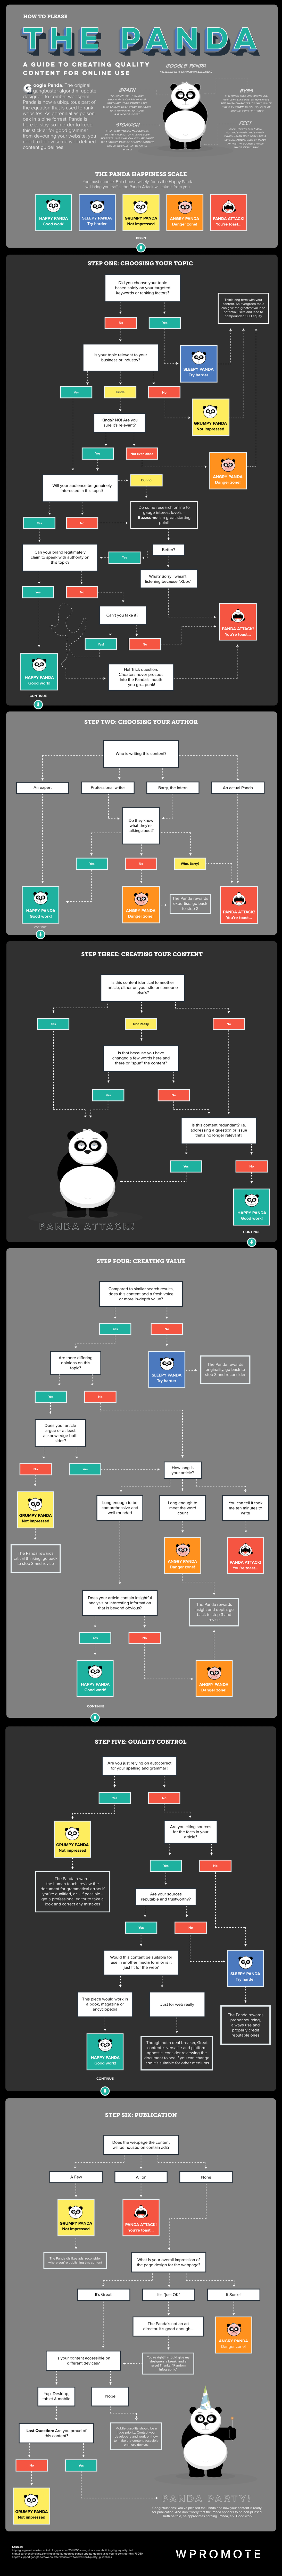 Infographic The panda 